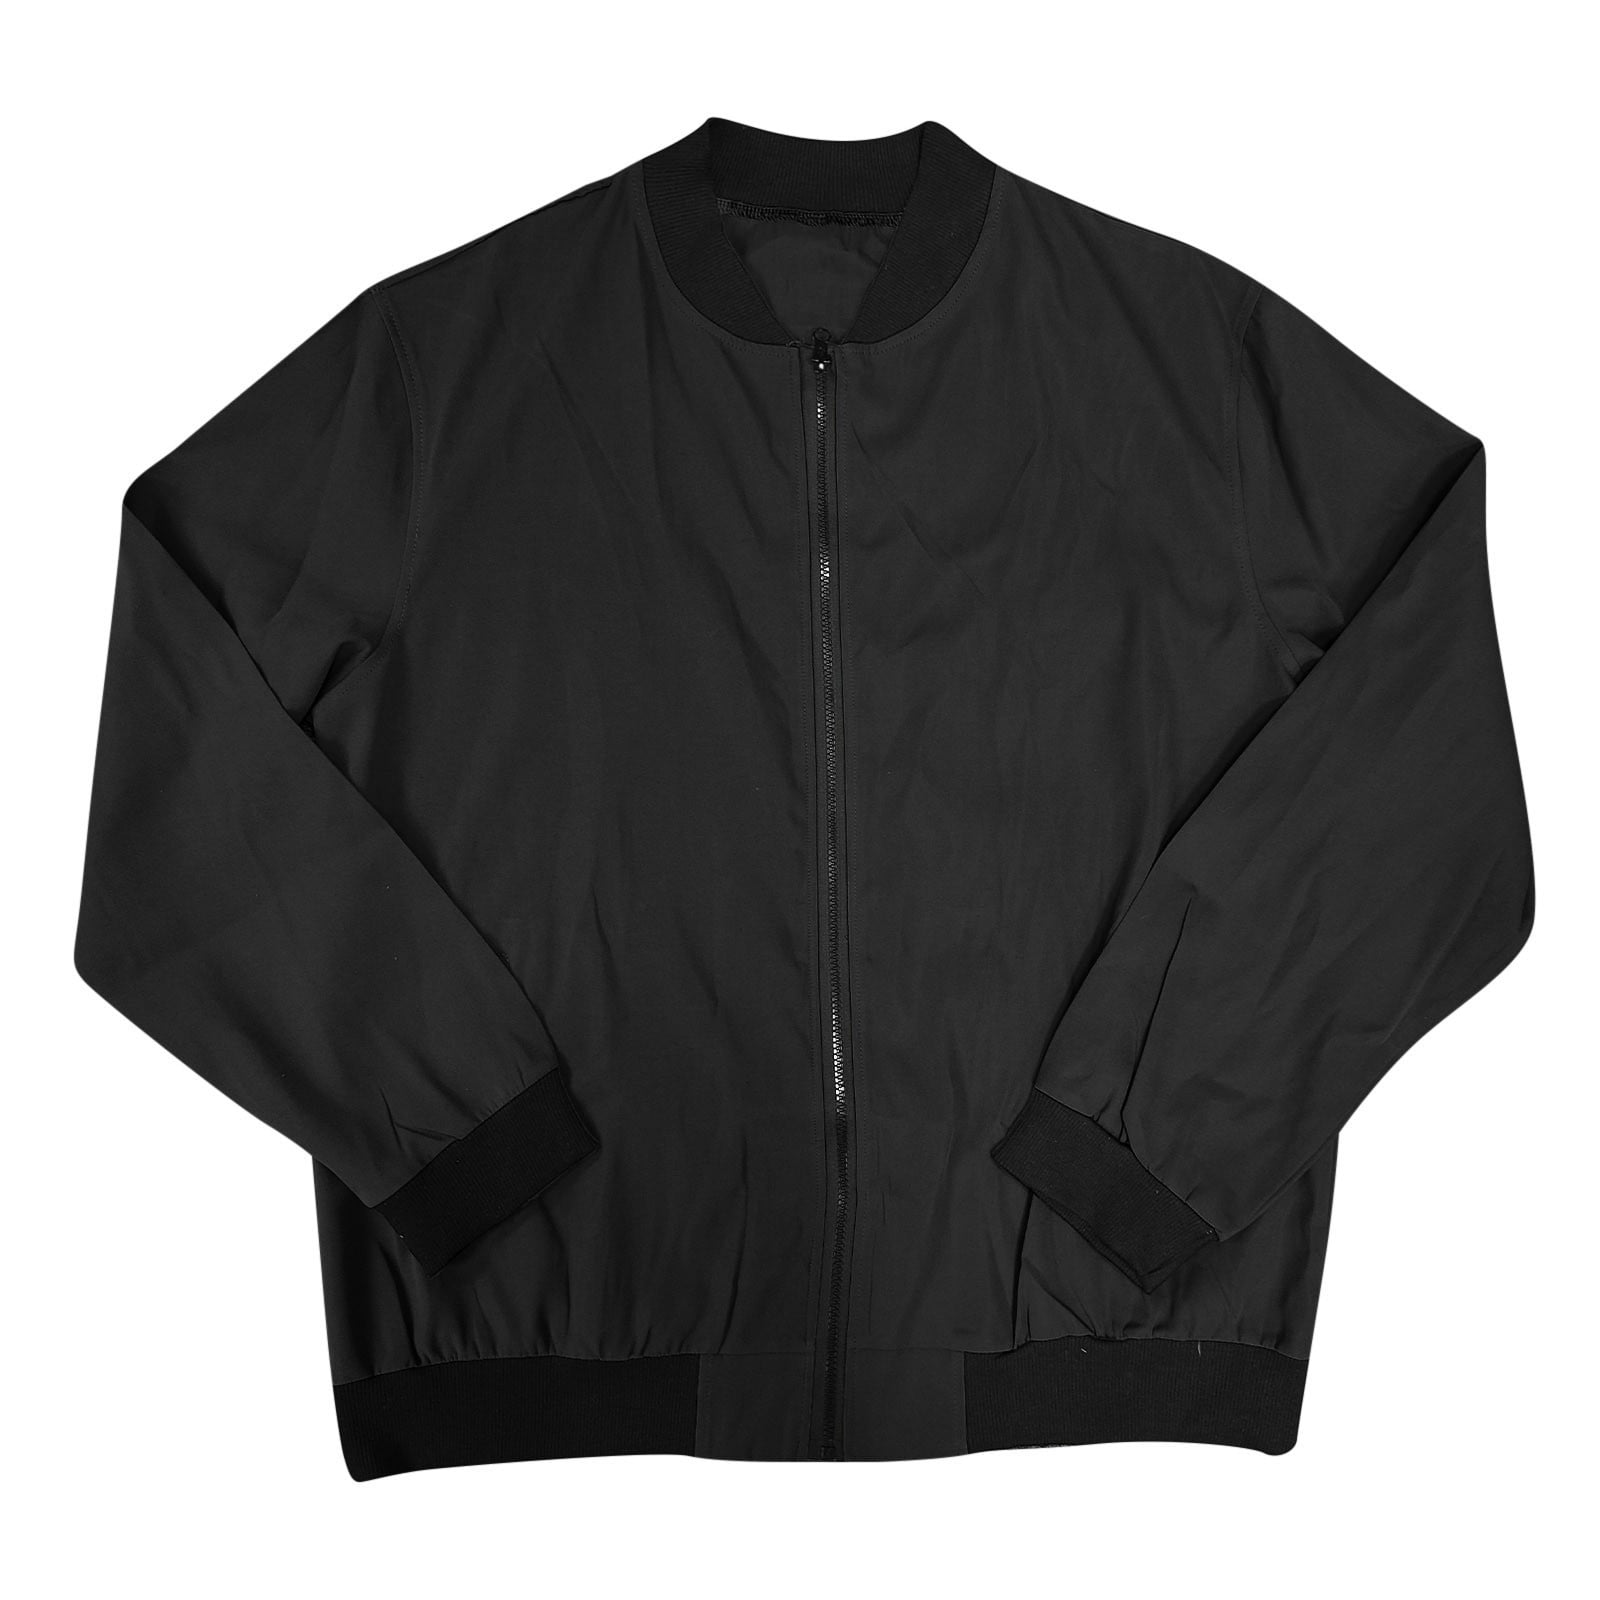 LEEy-world Jackets for Men Men'S Windbreaker Bomber Jackets 3 Zipper  Pockets Lightweight Spring Fall Varsity Baseball Jacket Khaki,S